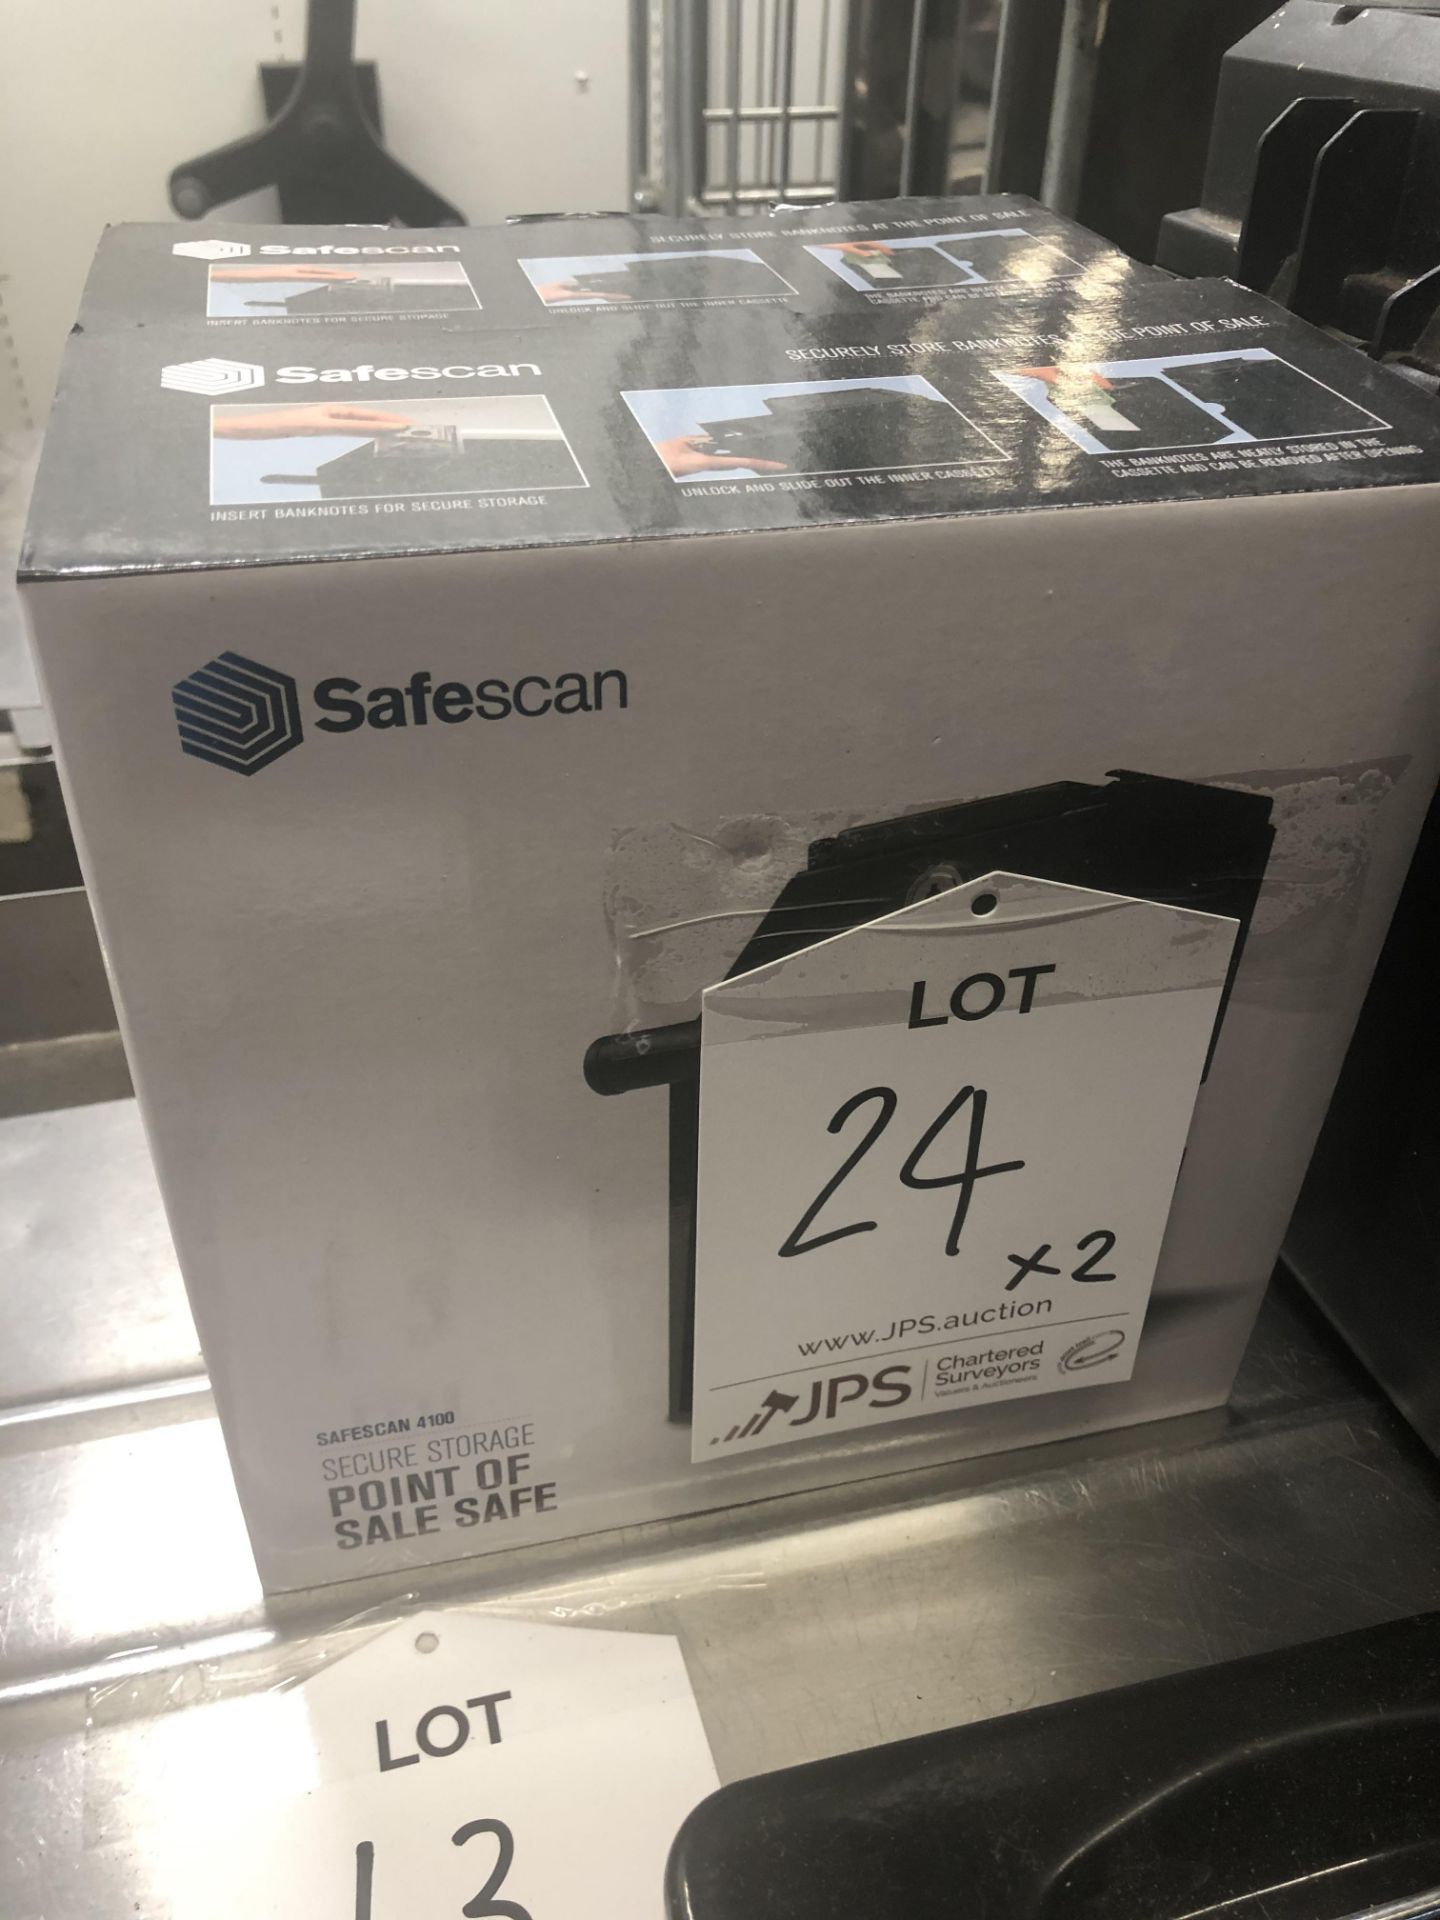 2 x SafeScan 4100 Secure Storage Point of Sale Safes - Image 2 of 4